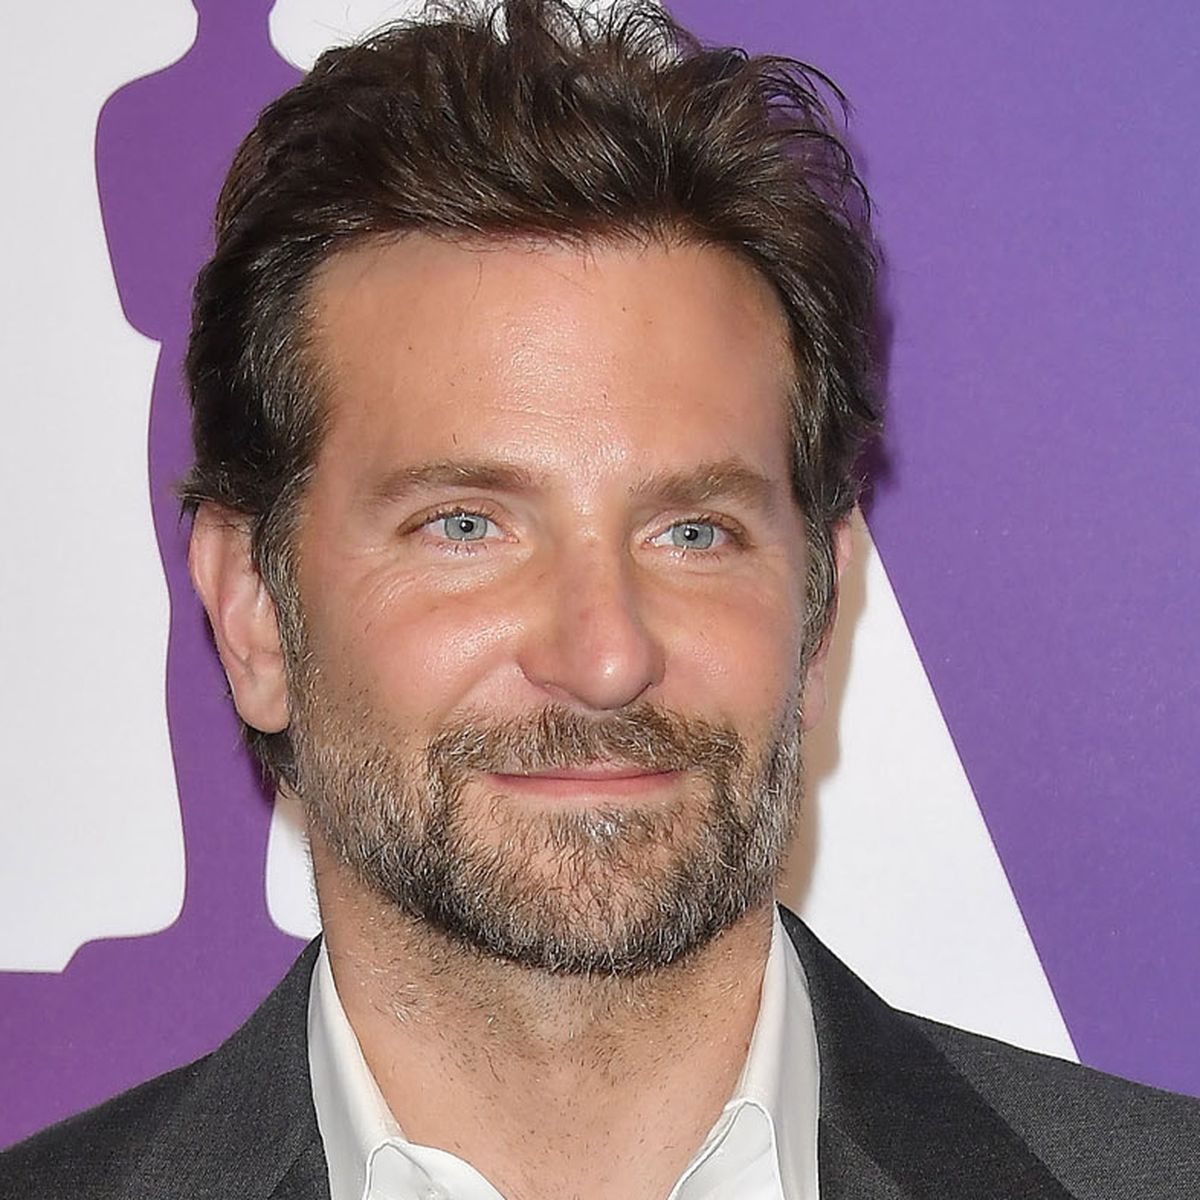 Bradley Cooper mocked over Oscar best actor nomination by 'hero